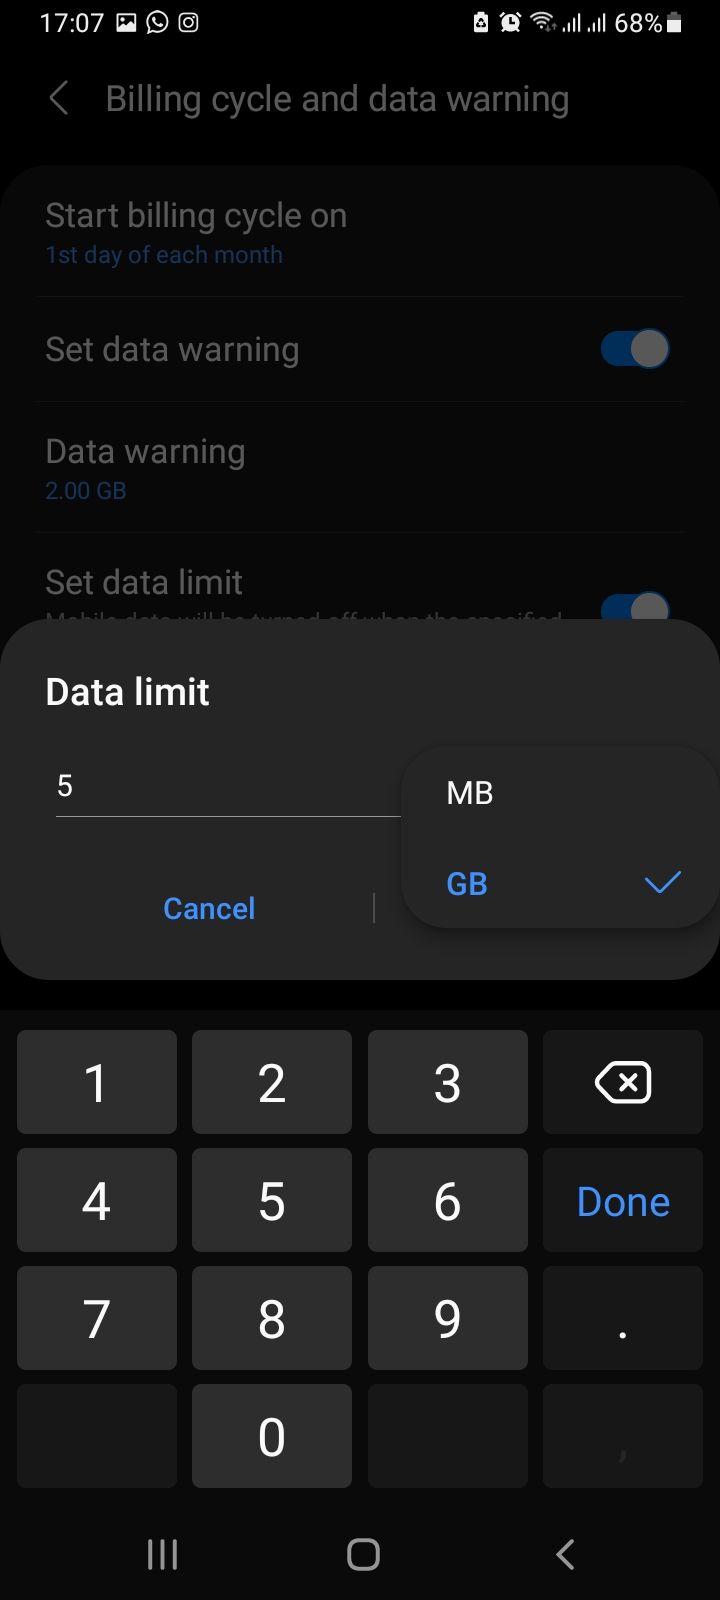 Data limit settings